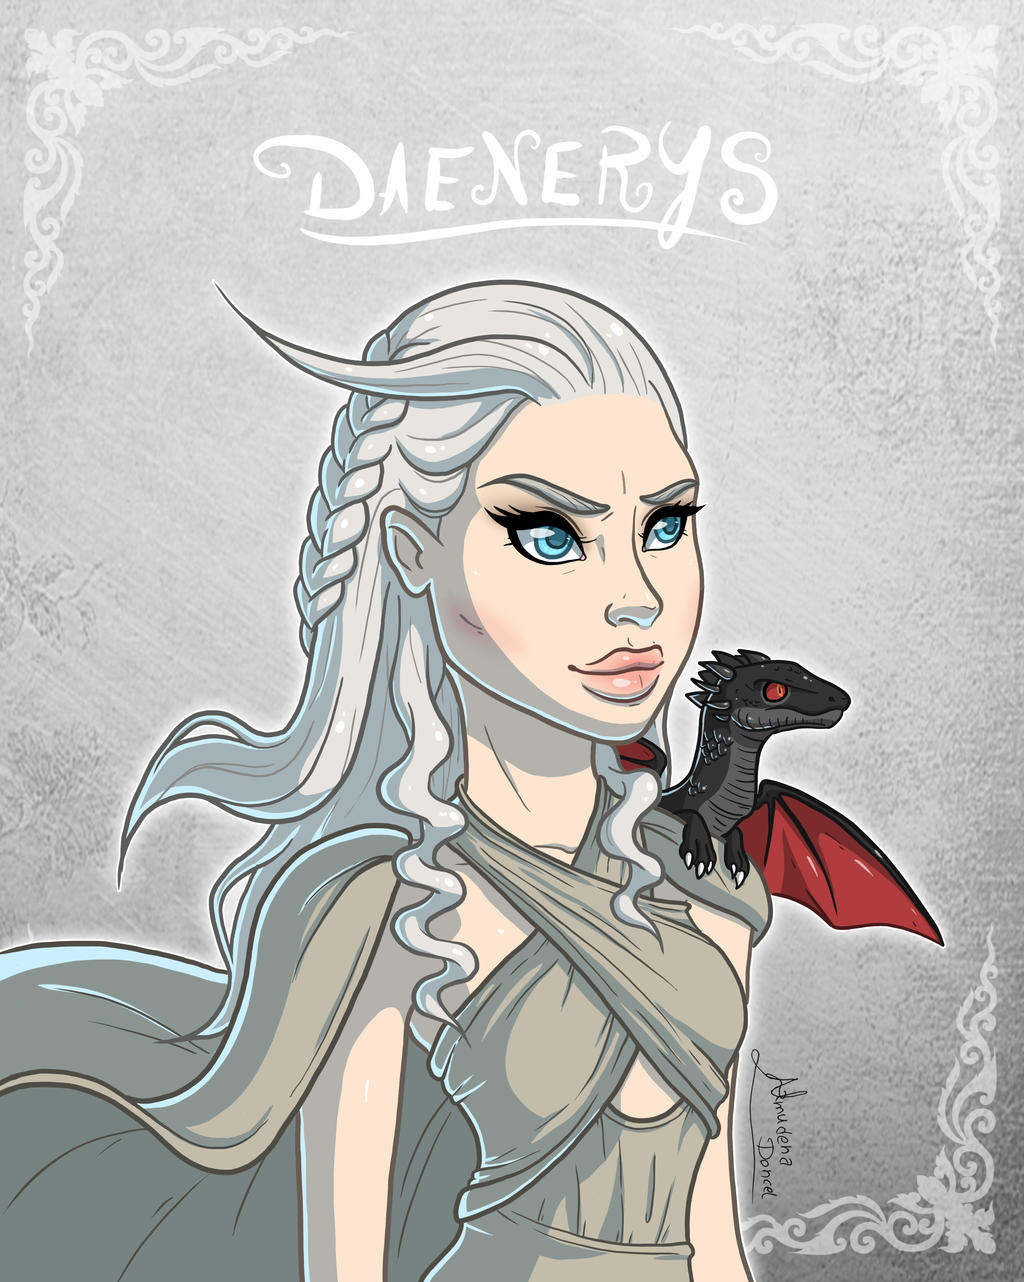 Daenerys of the Storm by Almairis on DeviantArt